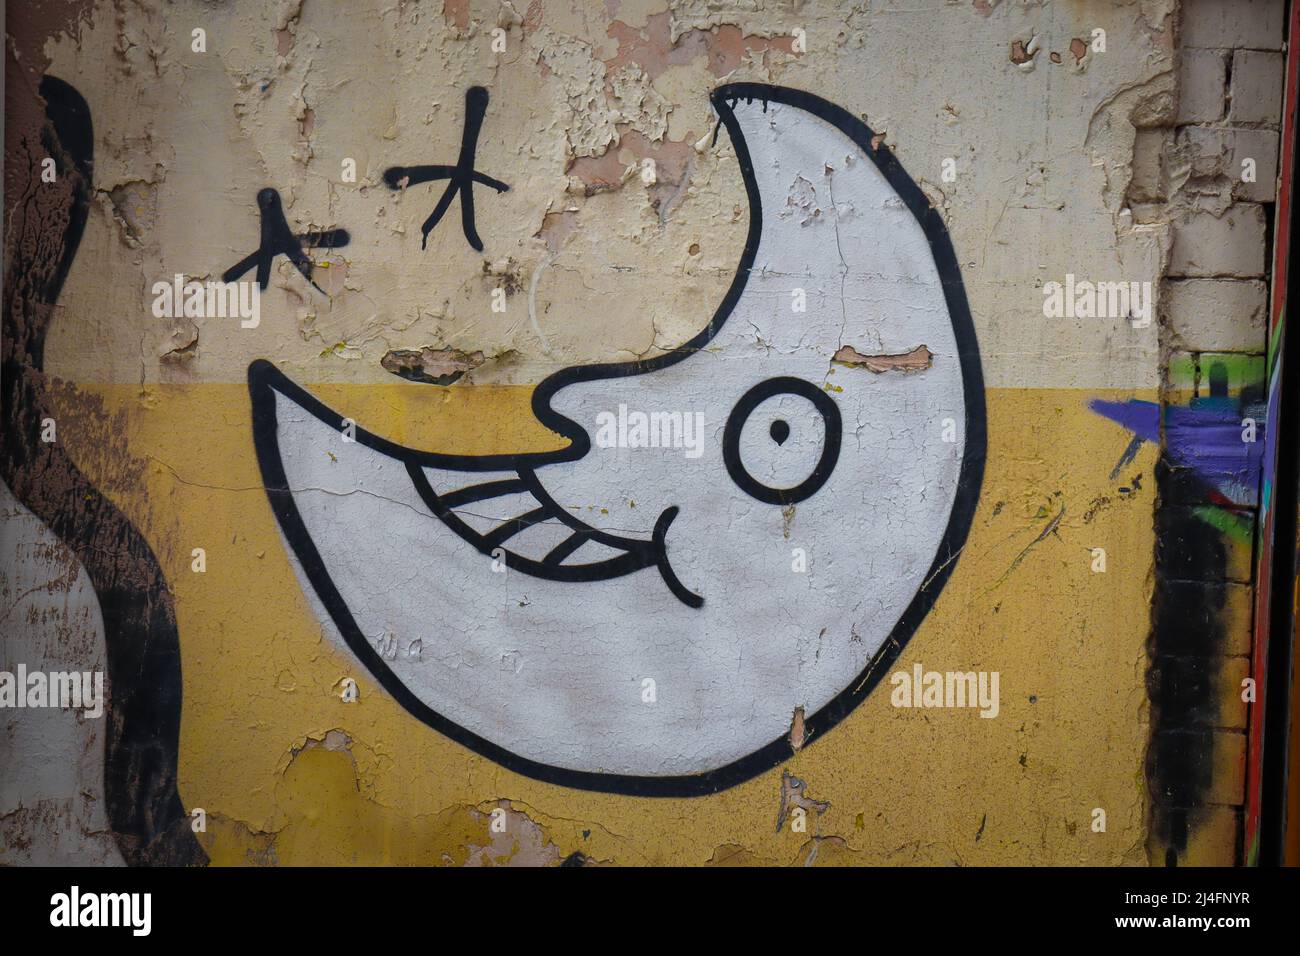 Smiling face crescent moon, street art Stock Photo